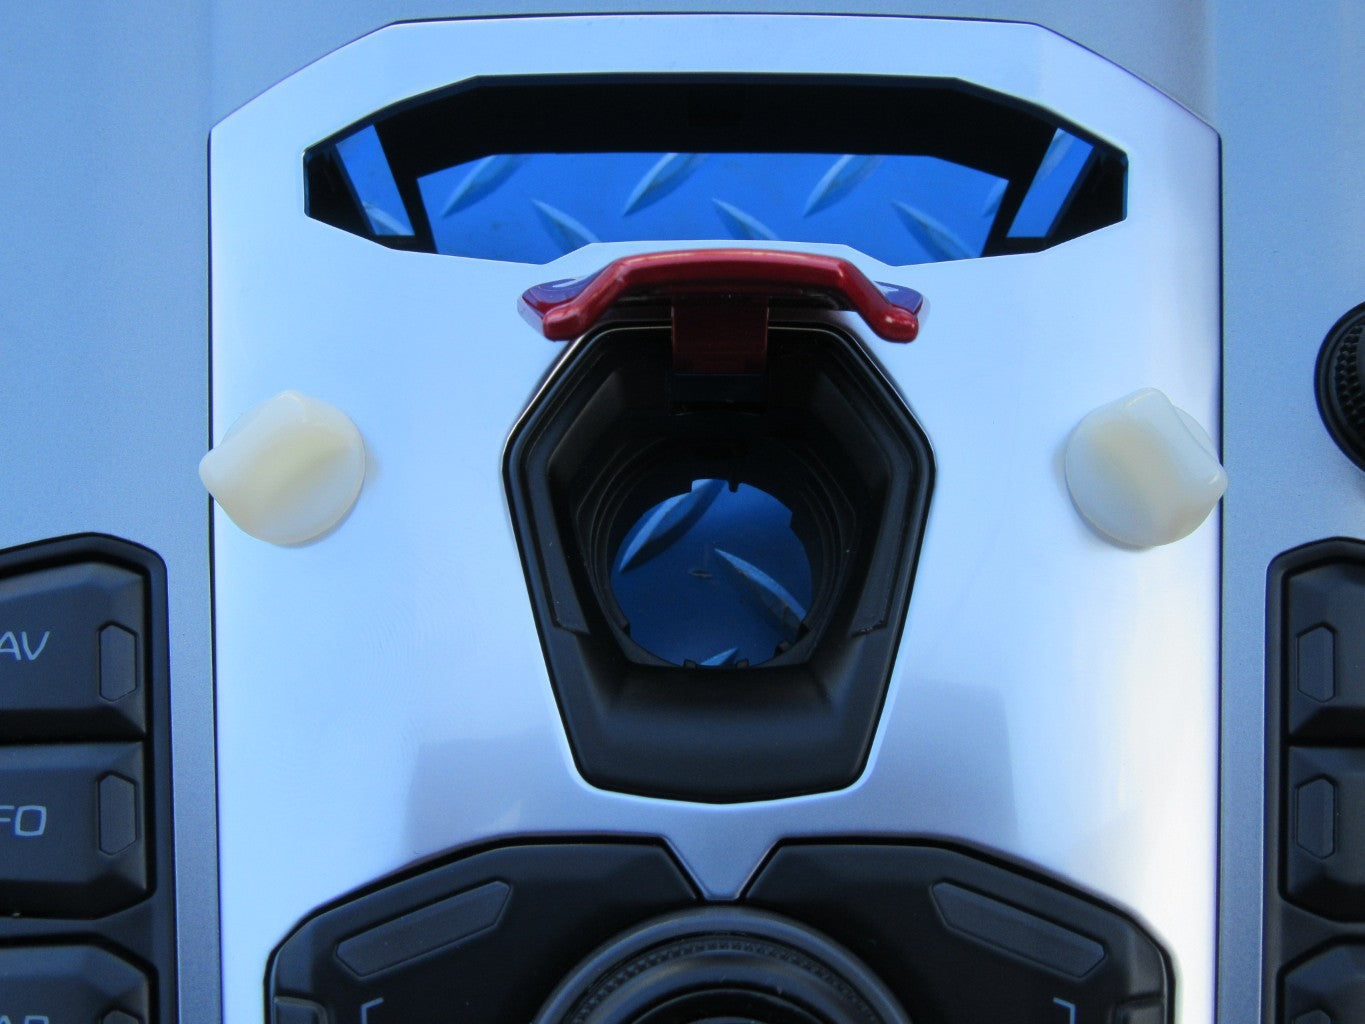 Lamborghini Aventador display control unit console #2486